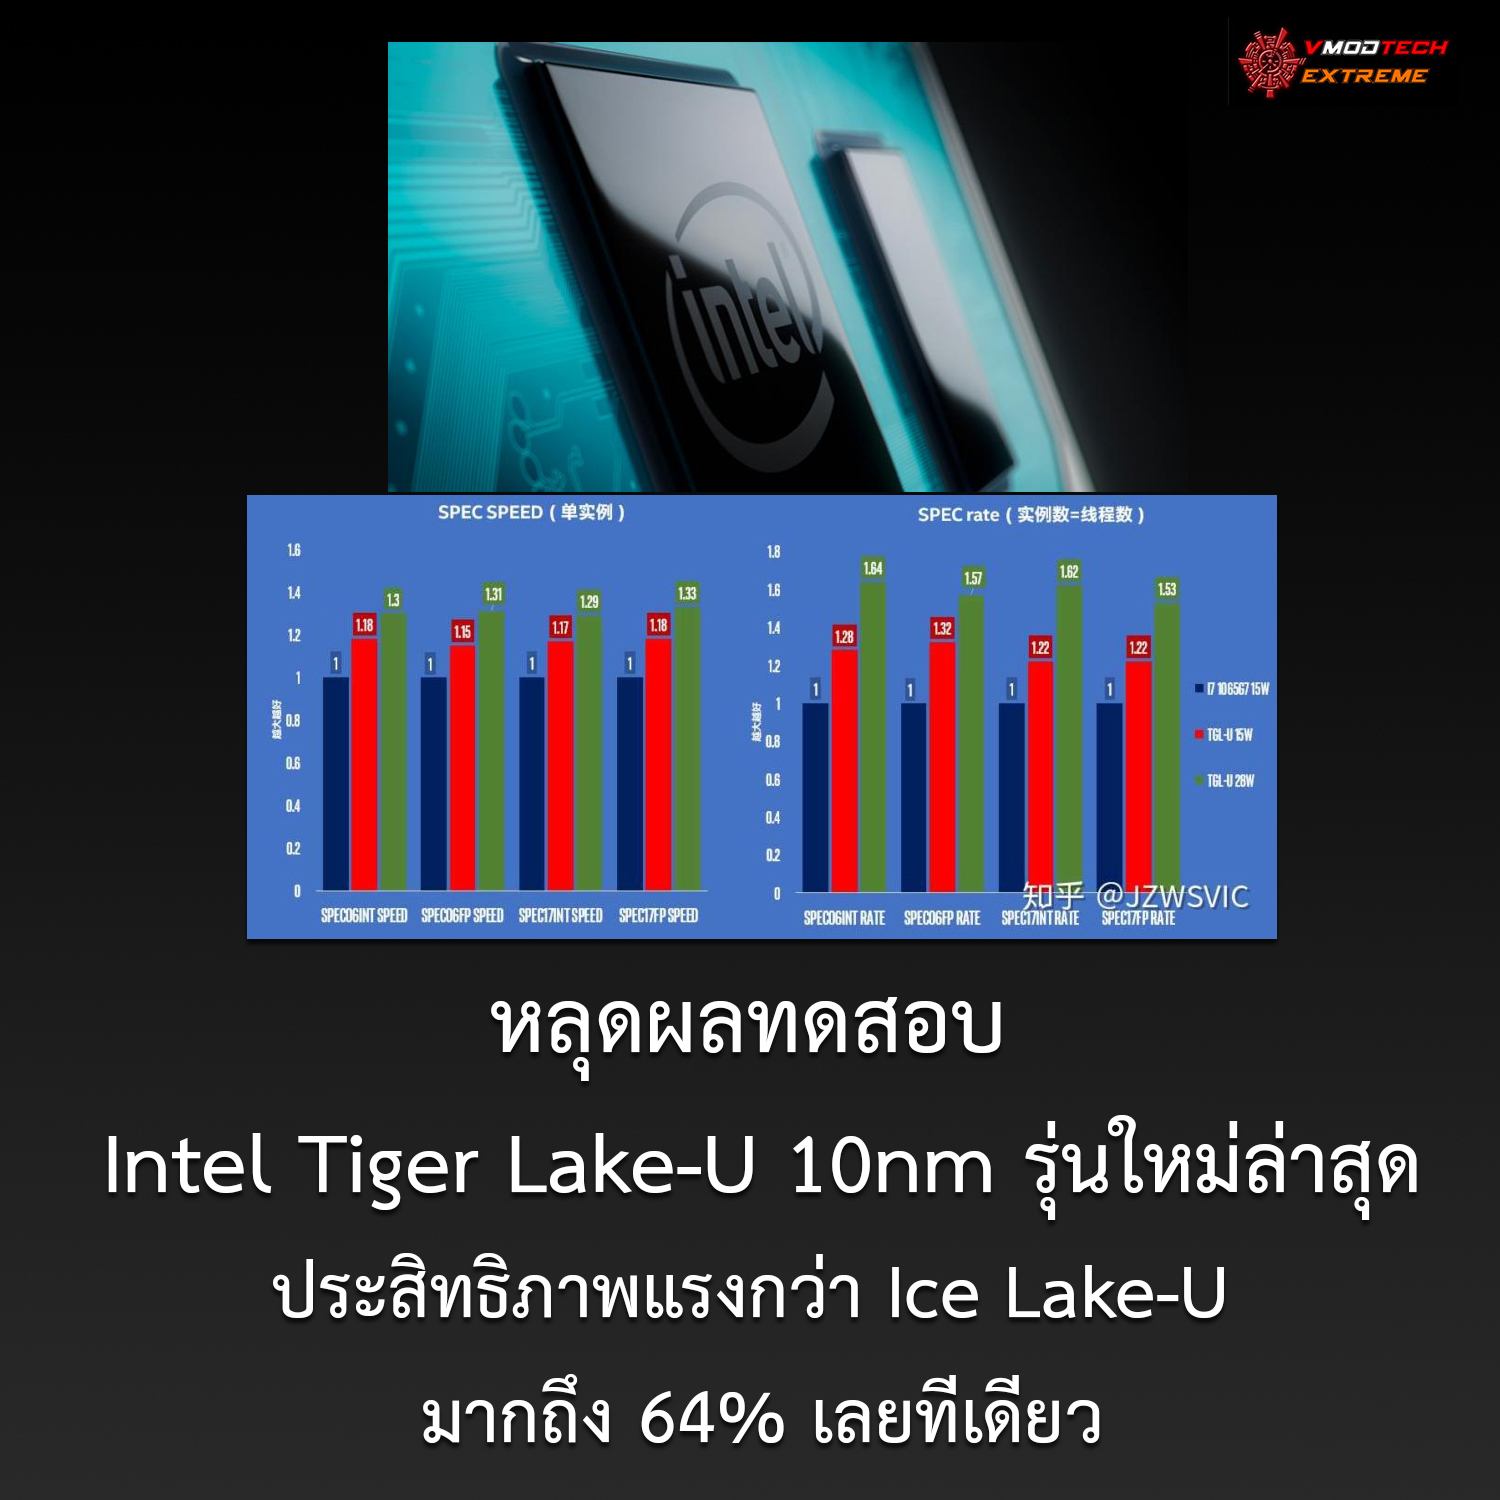 intel tiger lake u 10nm หลุดผลทดสอบอย่างไม่เป็นทางการ Intel Tiger Lake U 10nm รุ่นใหม่ล่าสุดประสิทธิภาพแรงกว่า Ice Lake U มากถึง 64% เลยทีเดียว